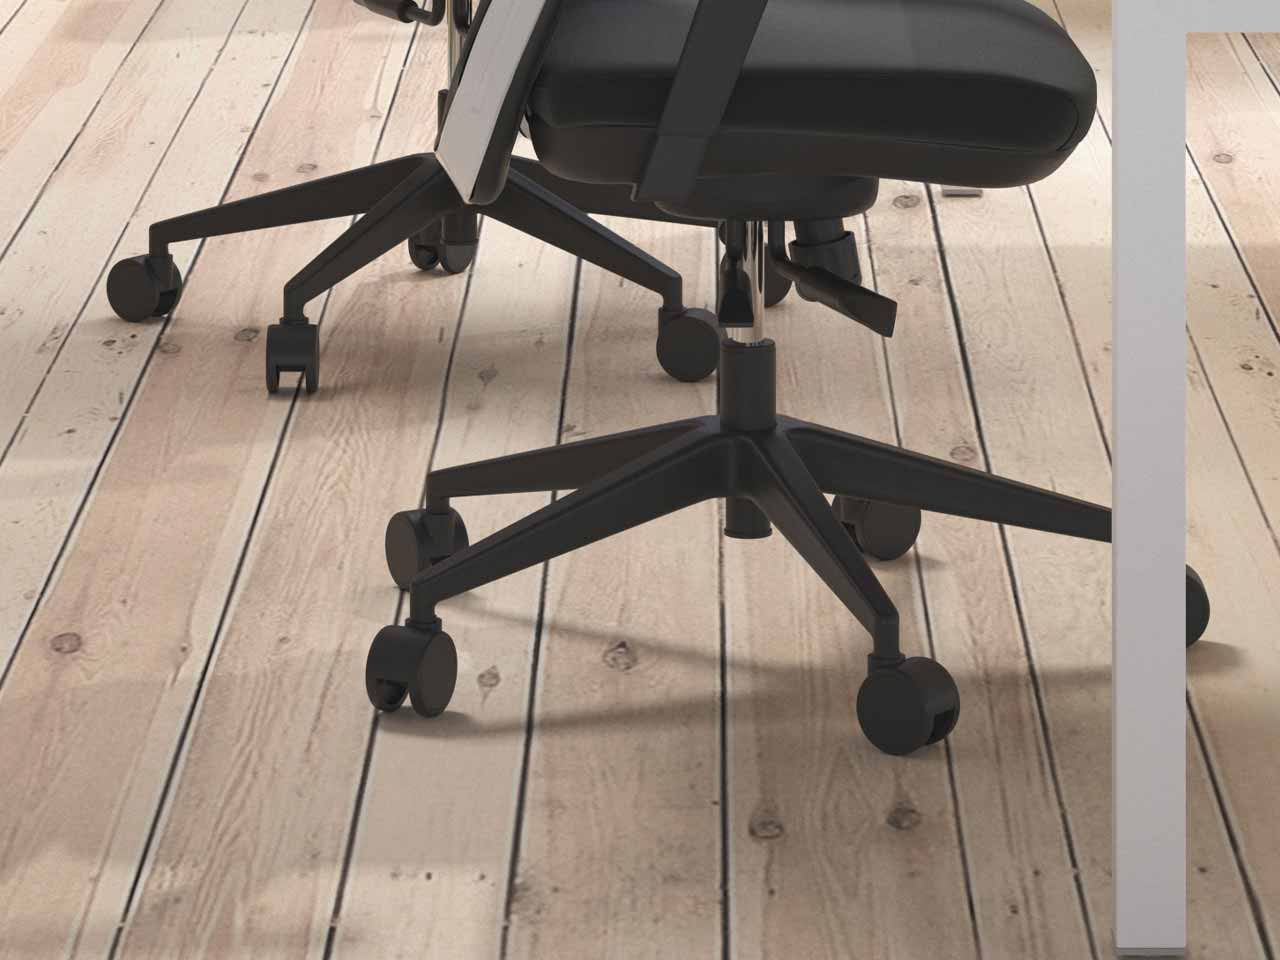 YJDQJL Ruedas Giratoriasx5,Rueda de silla de oficina para pisos duros,Rueda de PU blanda para silla de oficina giratoria,Resistente para piso de madera,11mm/10mm A 2in 